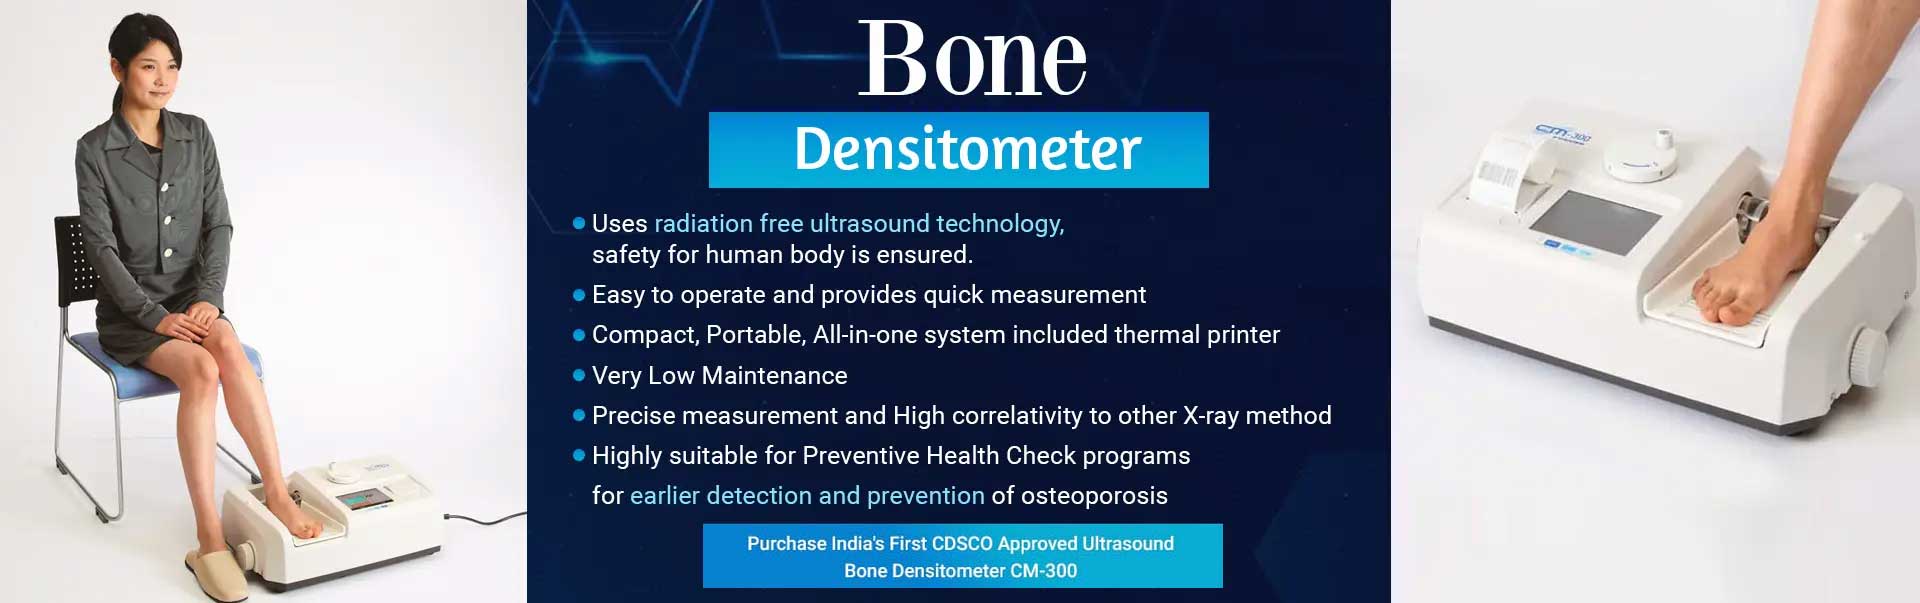 Bone Densitometer Manufacturers in Nagpur